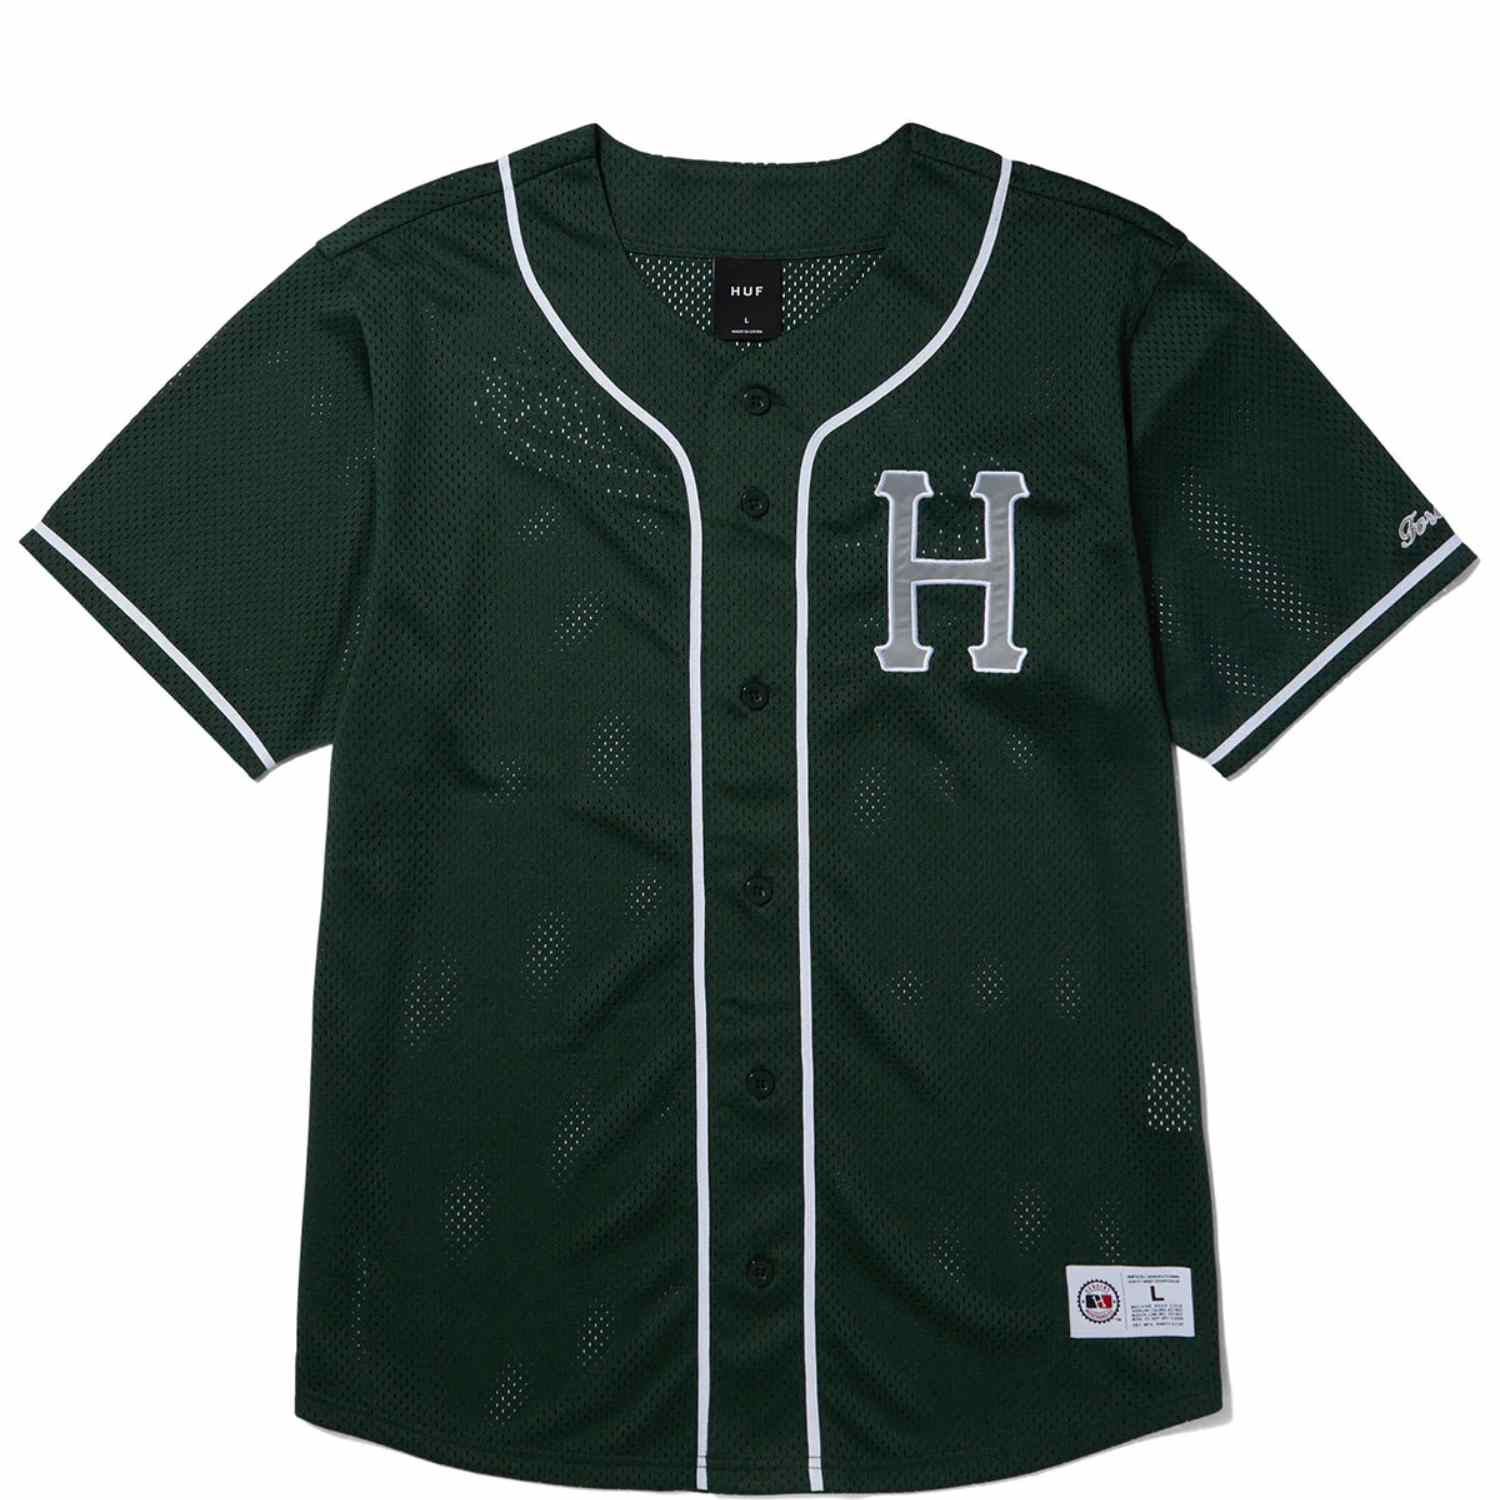 Huf - Crackerjack Baseball Jersey - Pine Green